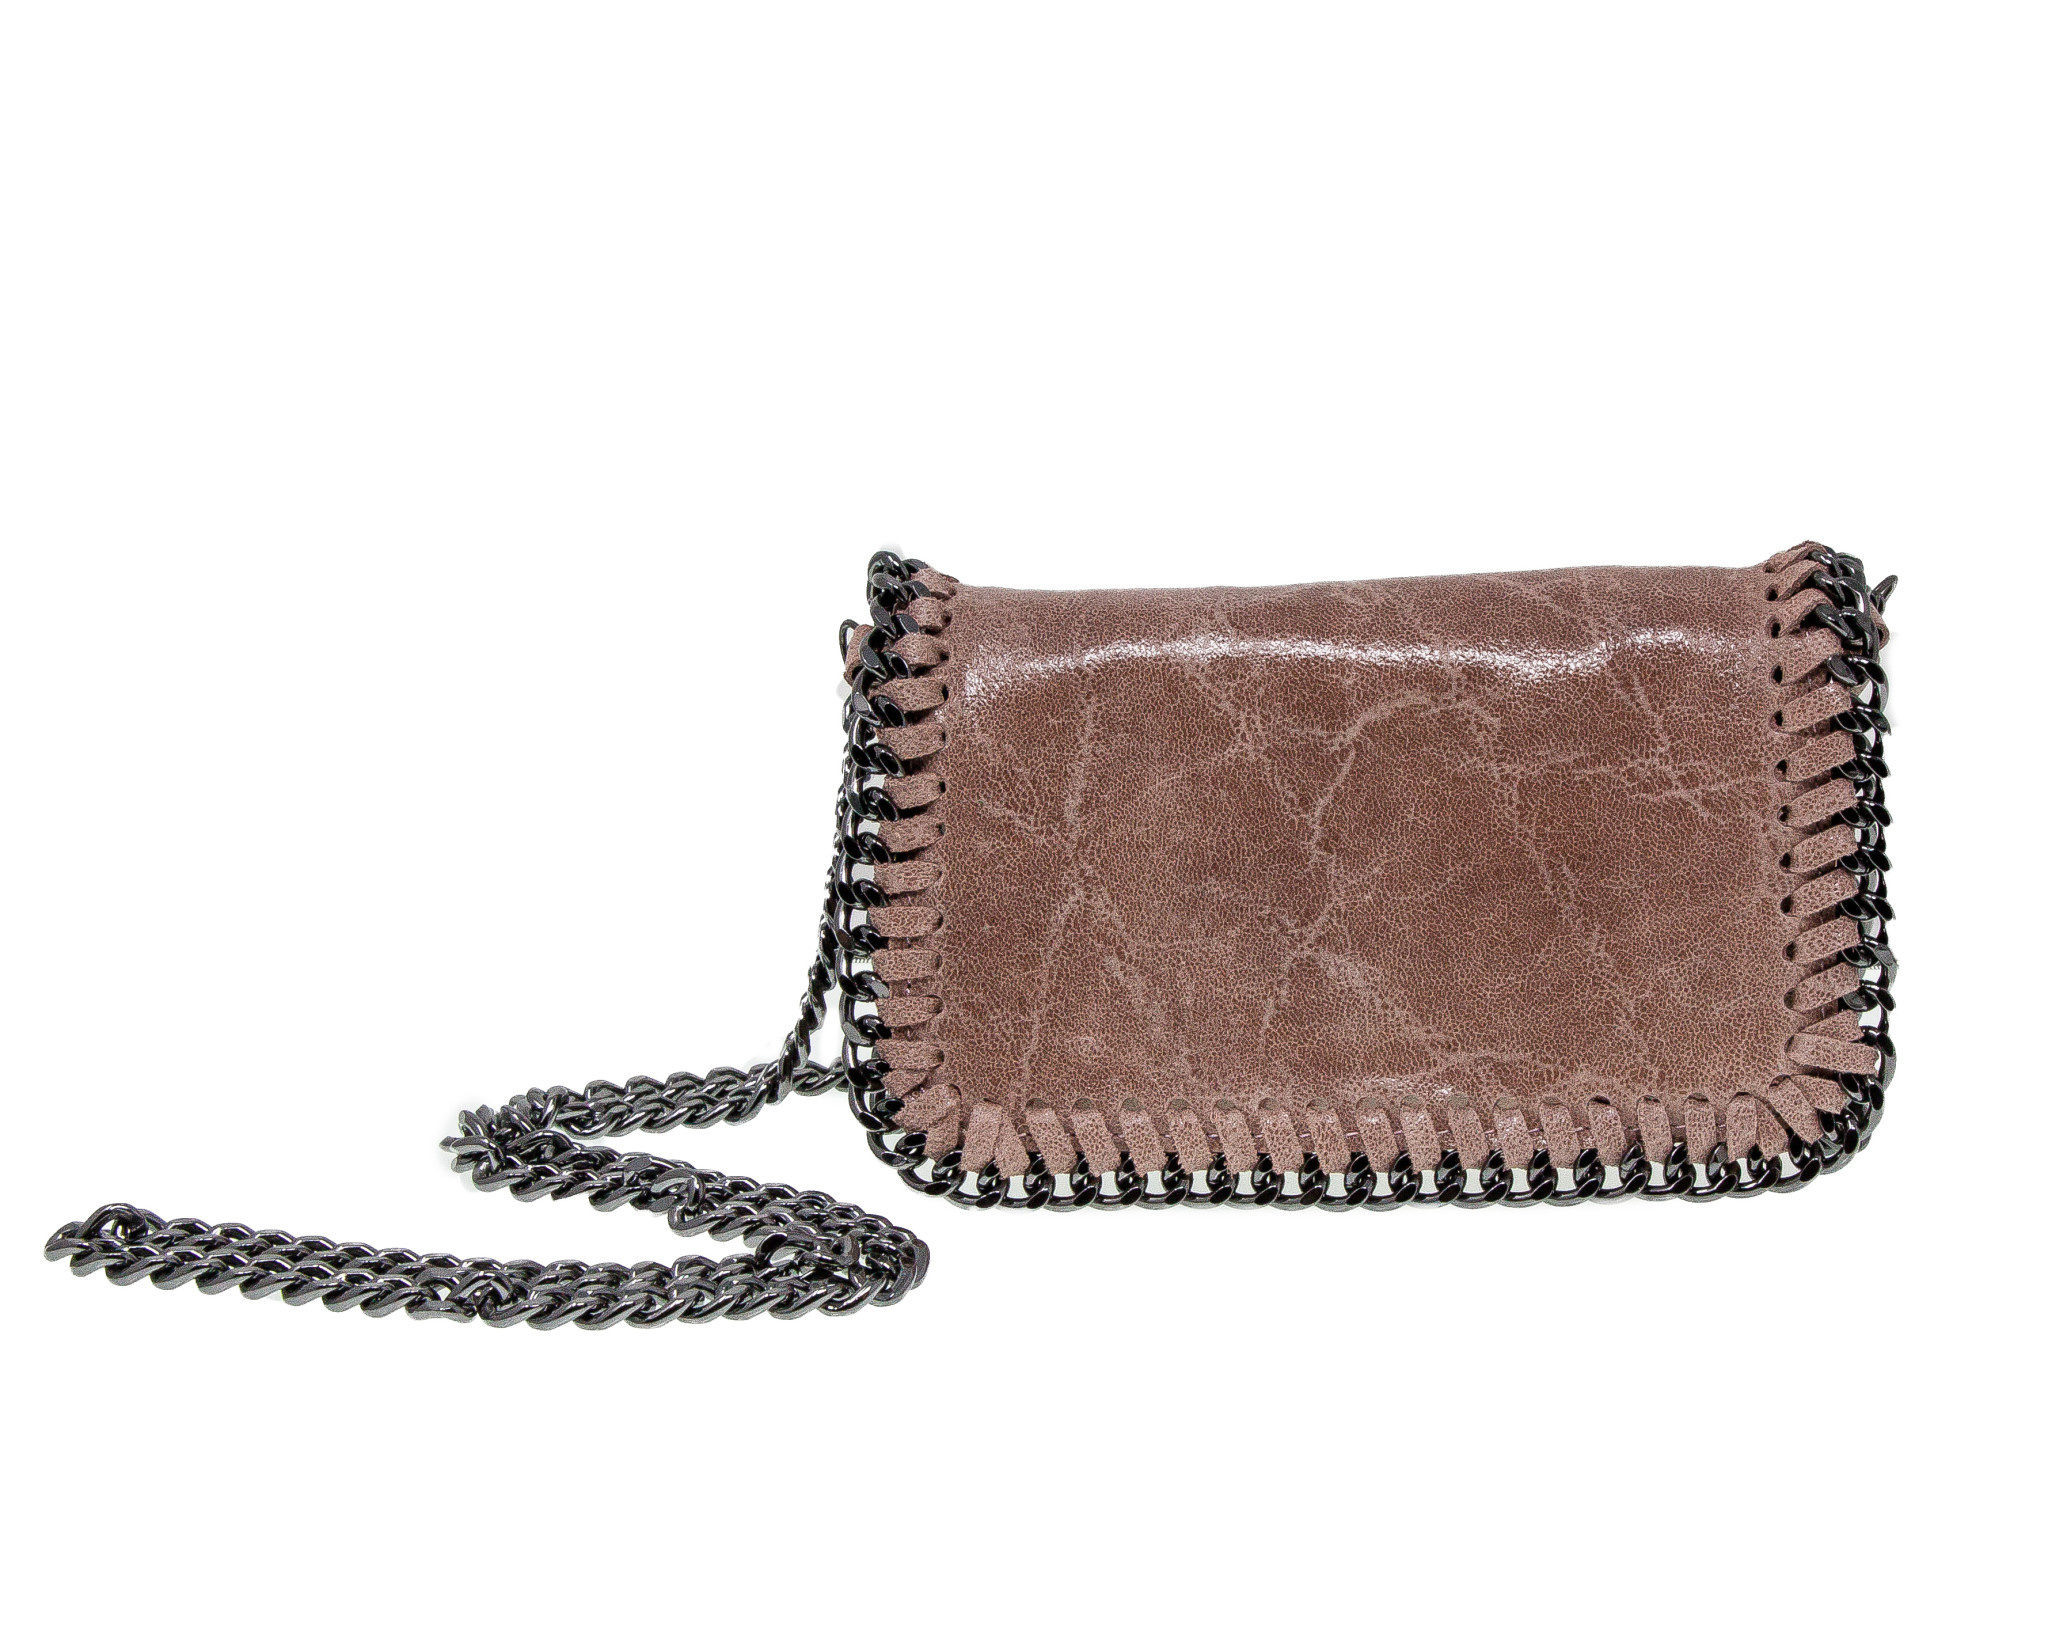 Badgley Mischka Tan Purse With Faux Light Feather/Fur Trim Gold Chain Strap  | Tan purse, Chain strap, Fur trim